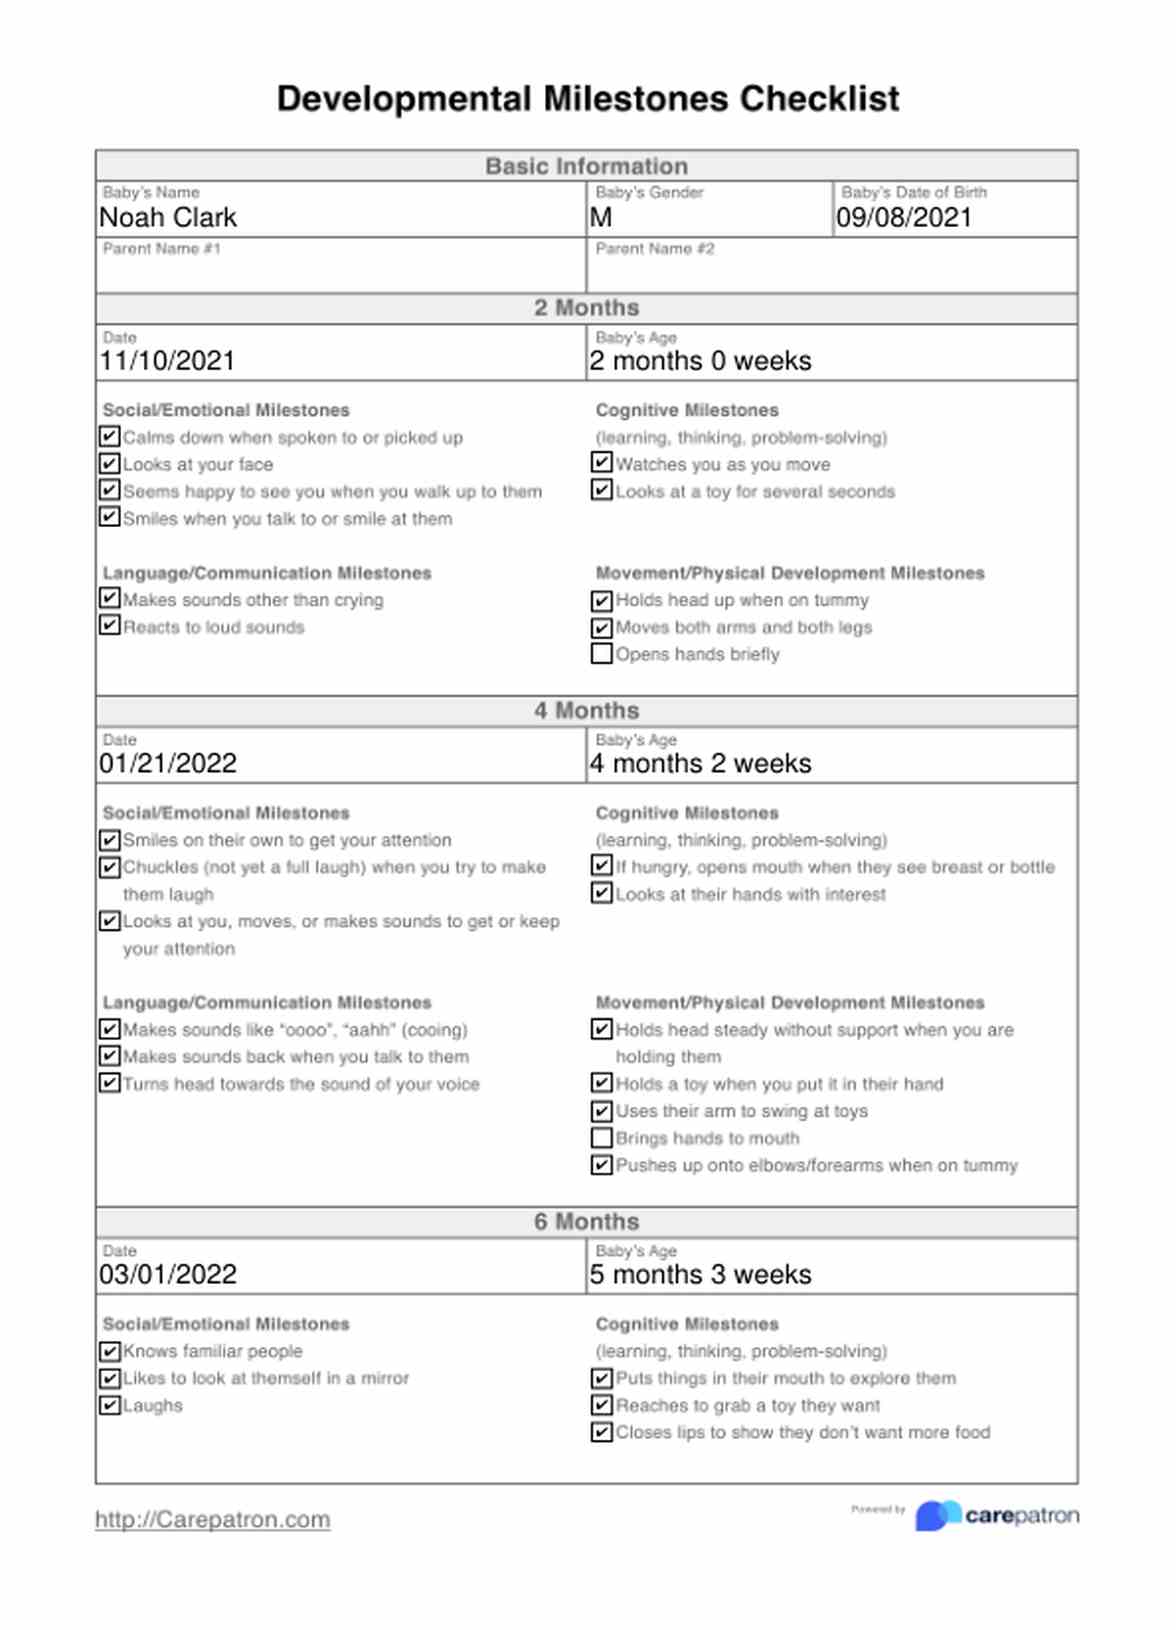 Developmental Milestones Checklist PDF Example